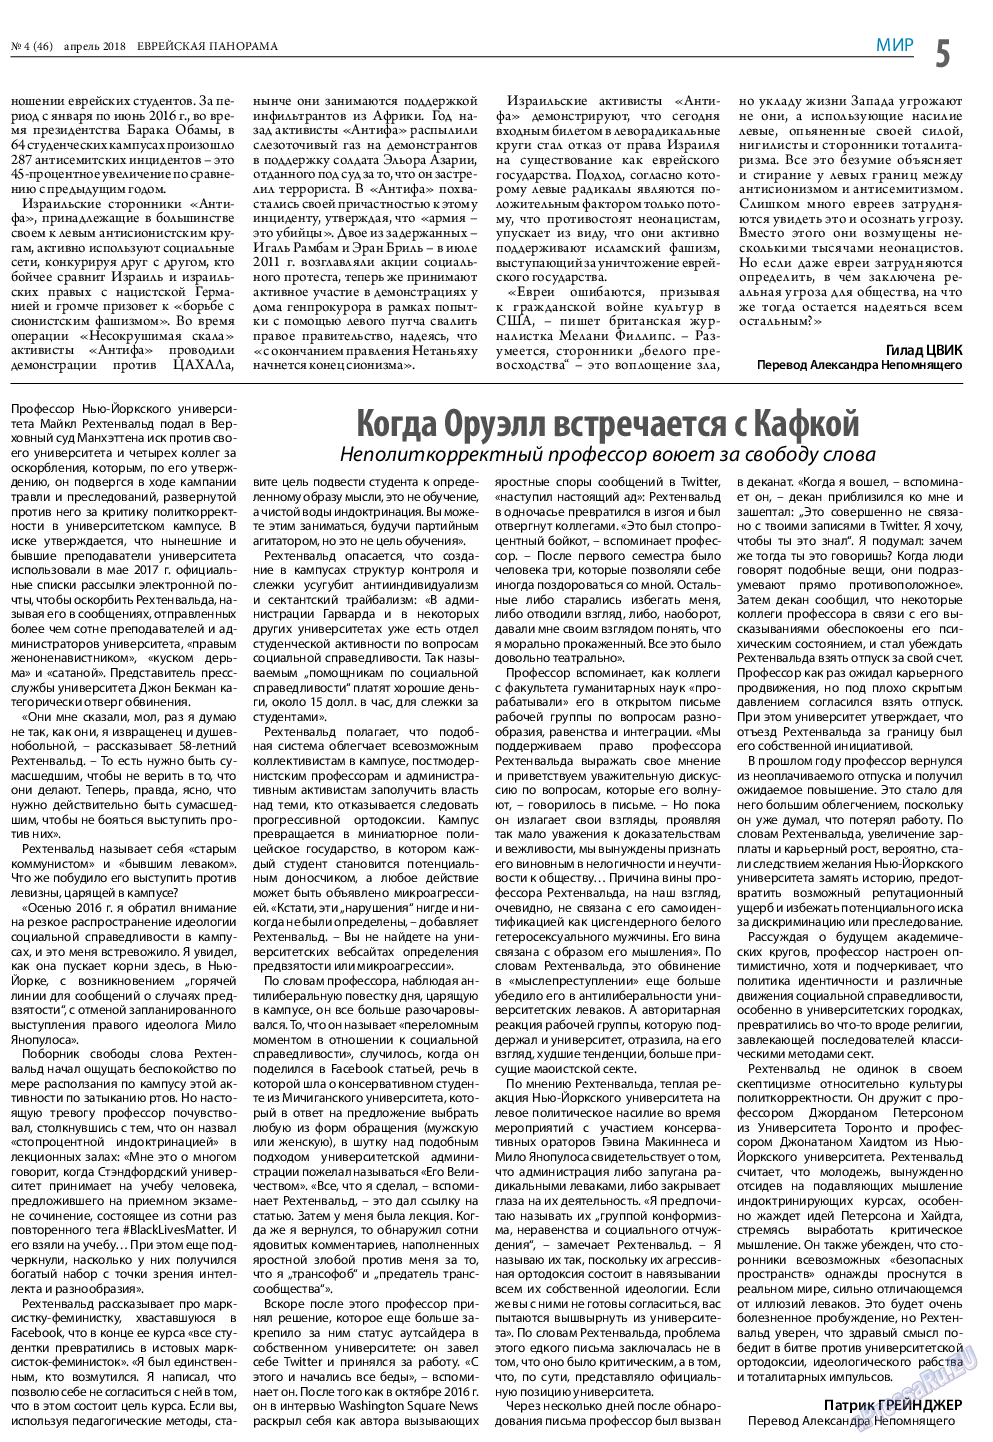 Еврейская панорама, газета. 2018 №4 стр.5